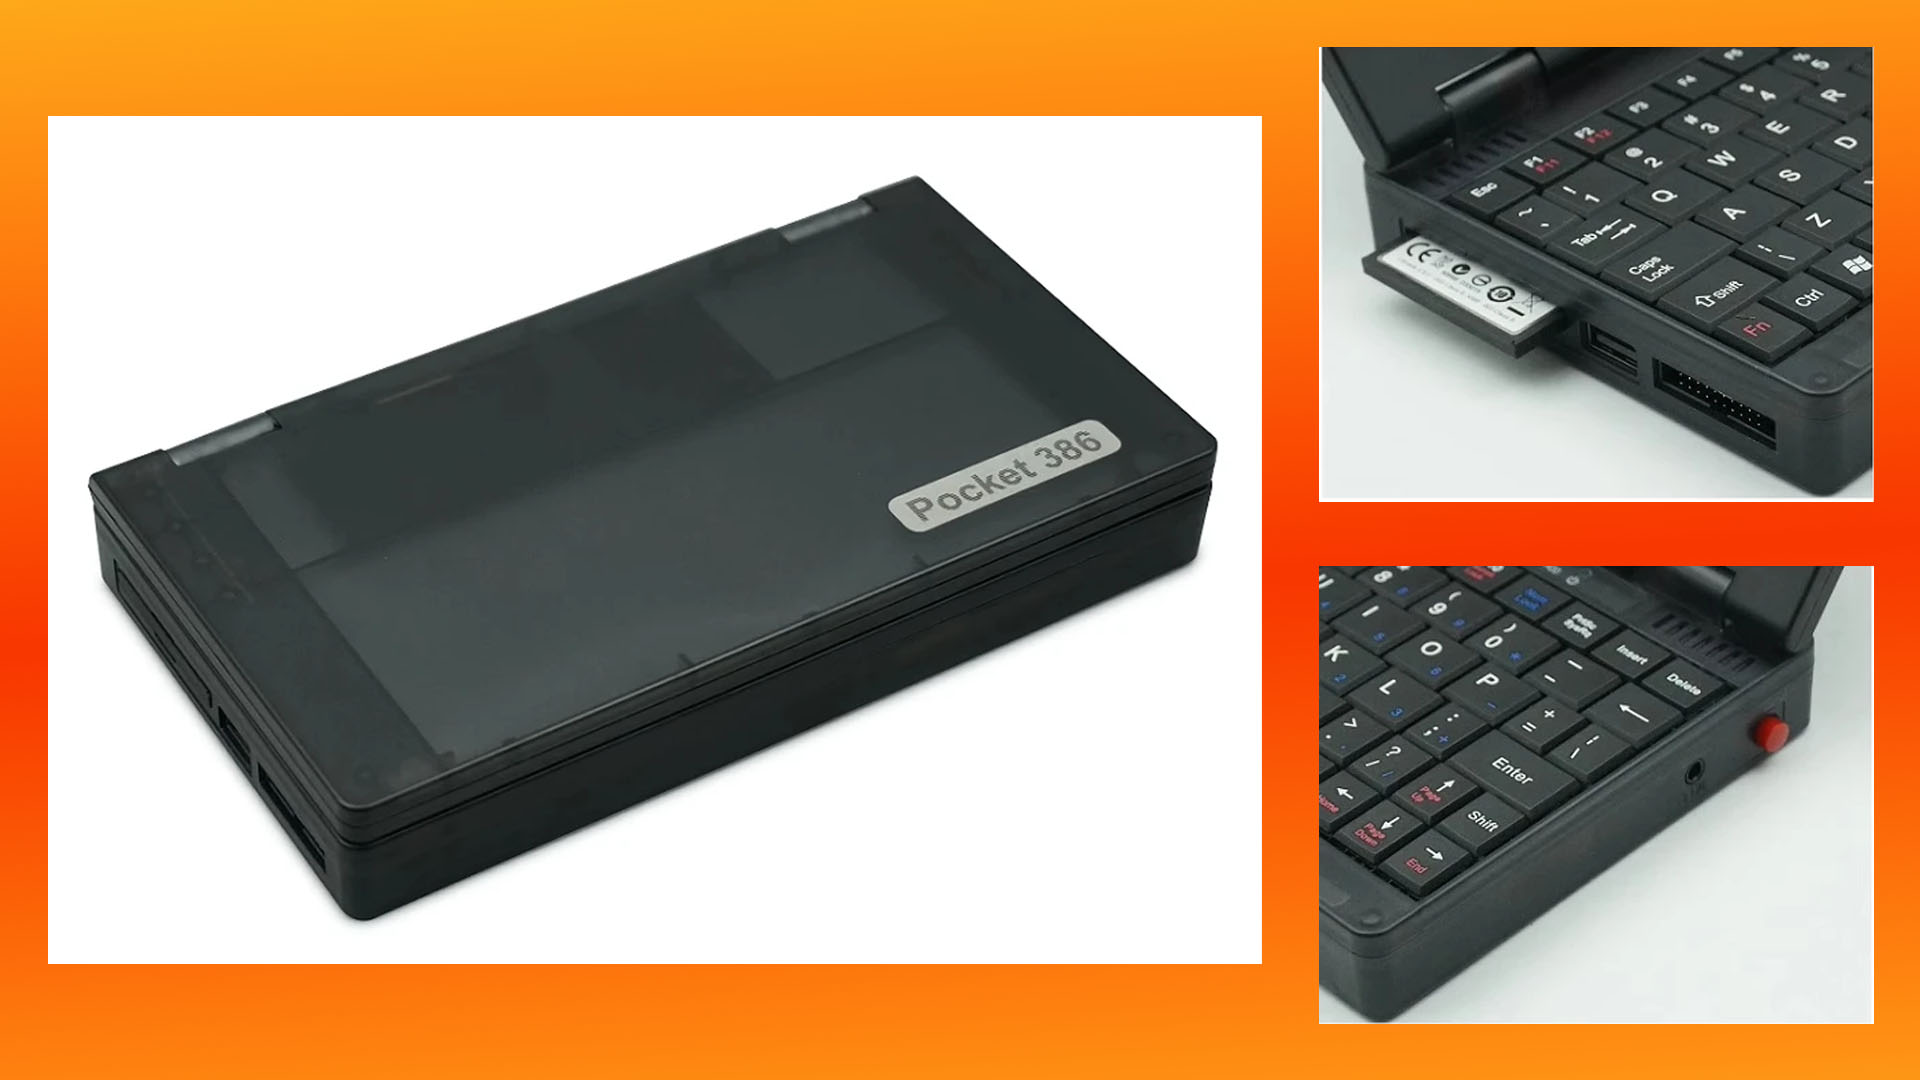 Retro-Gaming-PC-Laptops - Pocket Pocket 386